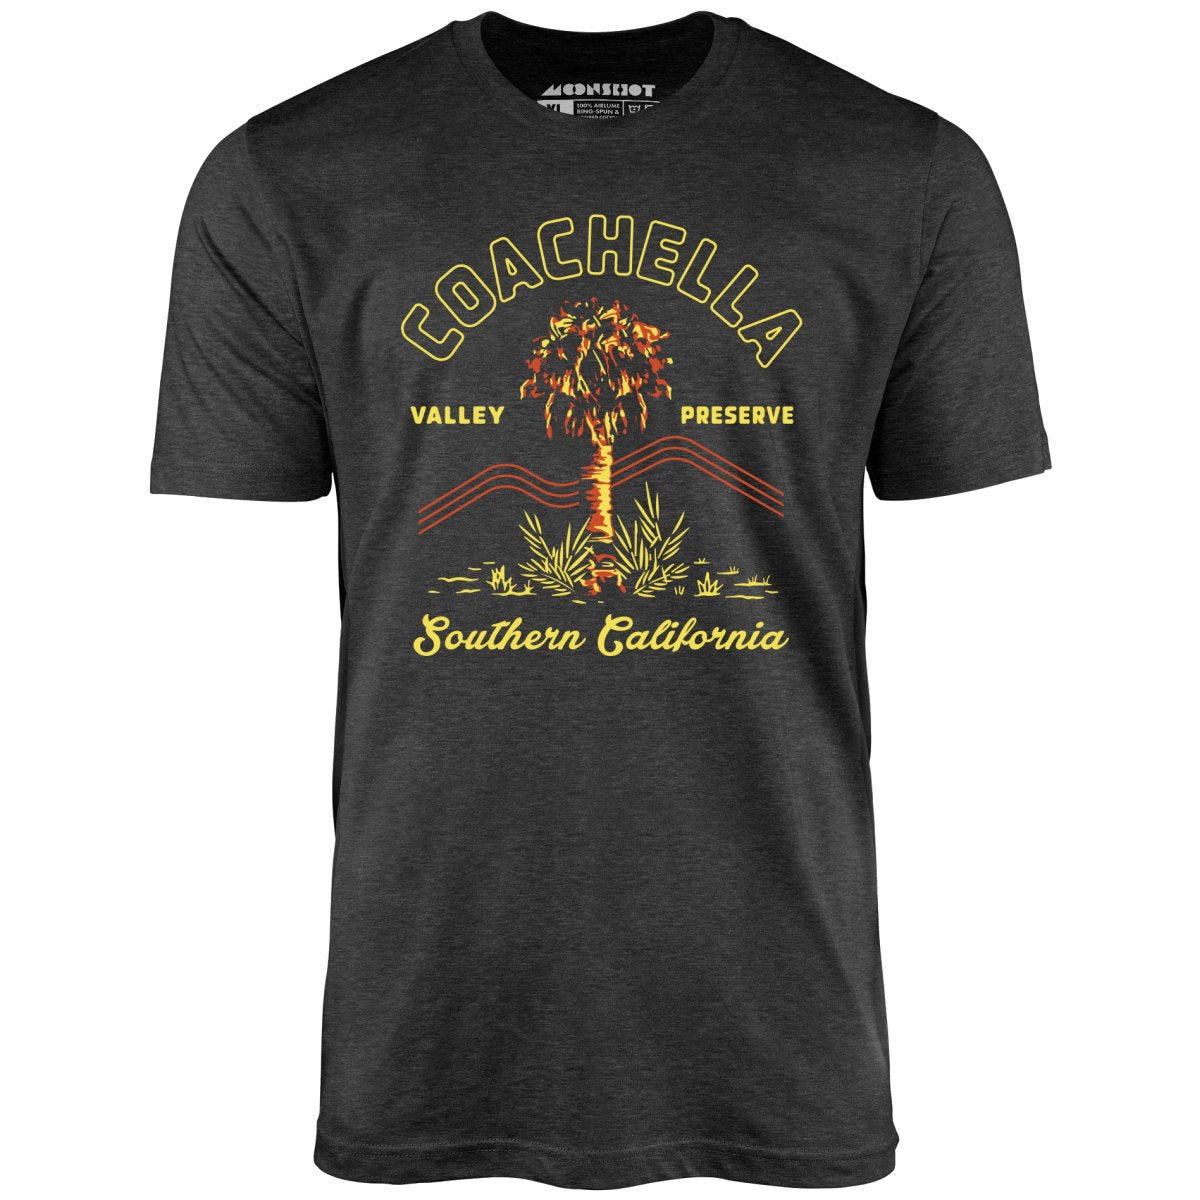 Coachella Valley Preserve - Southern California - Unisex T-Shirt